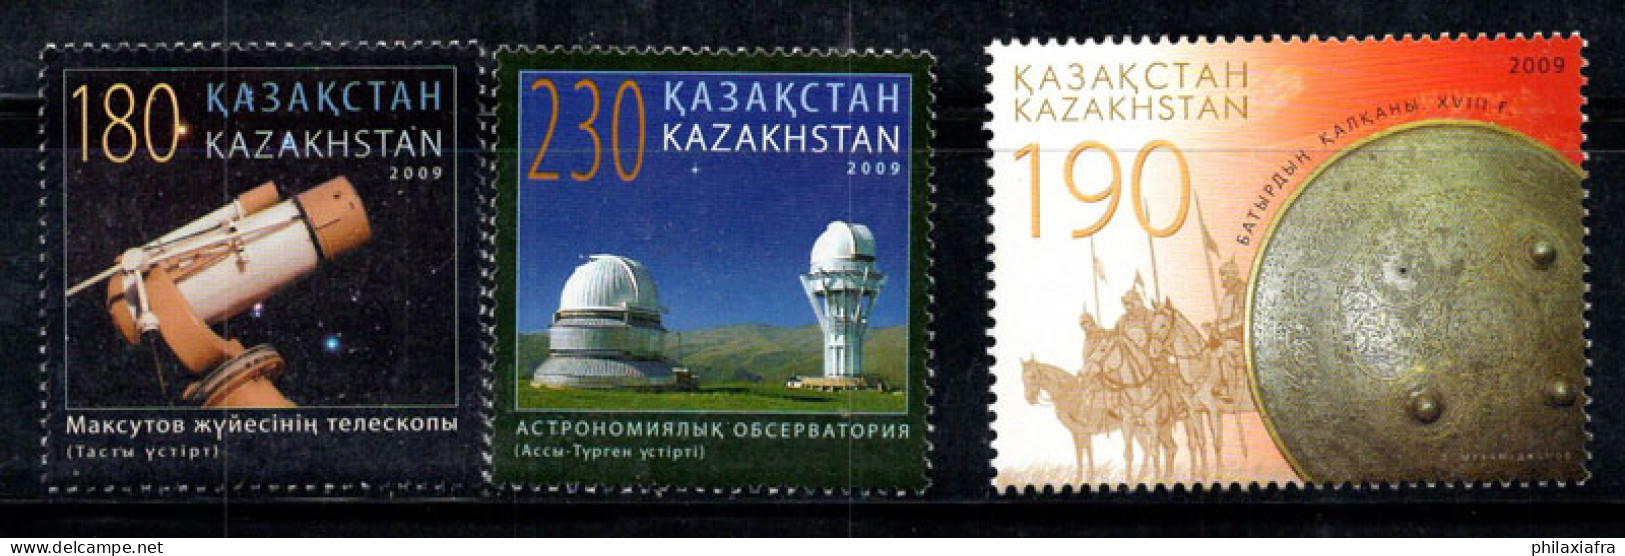 Kazakhstan 2009 Mi. 646-648 Neuf ** 100% Astronomie, Bouclier - Kazakhstan